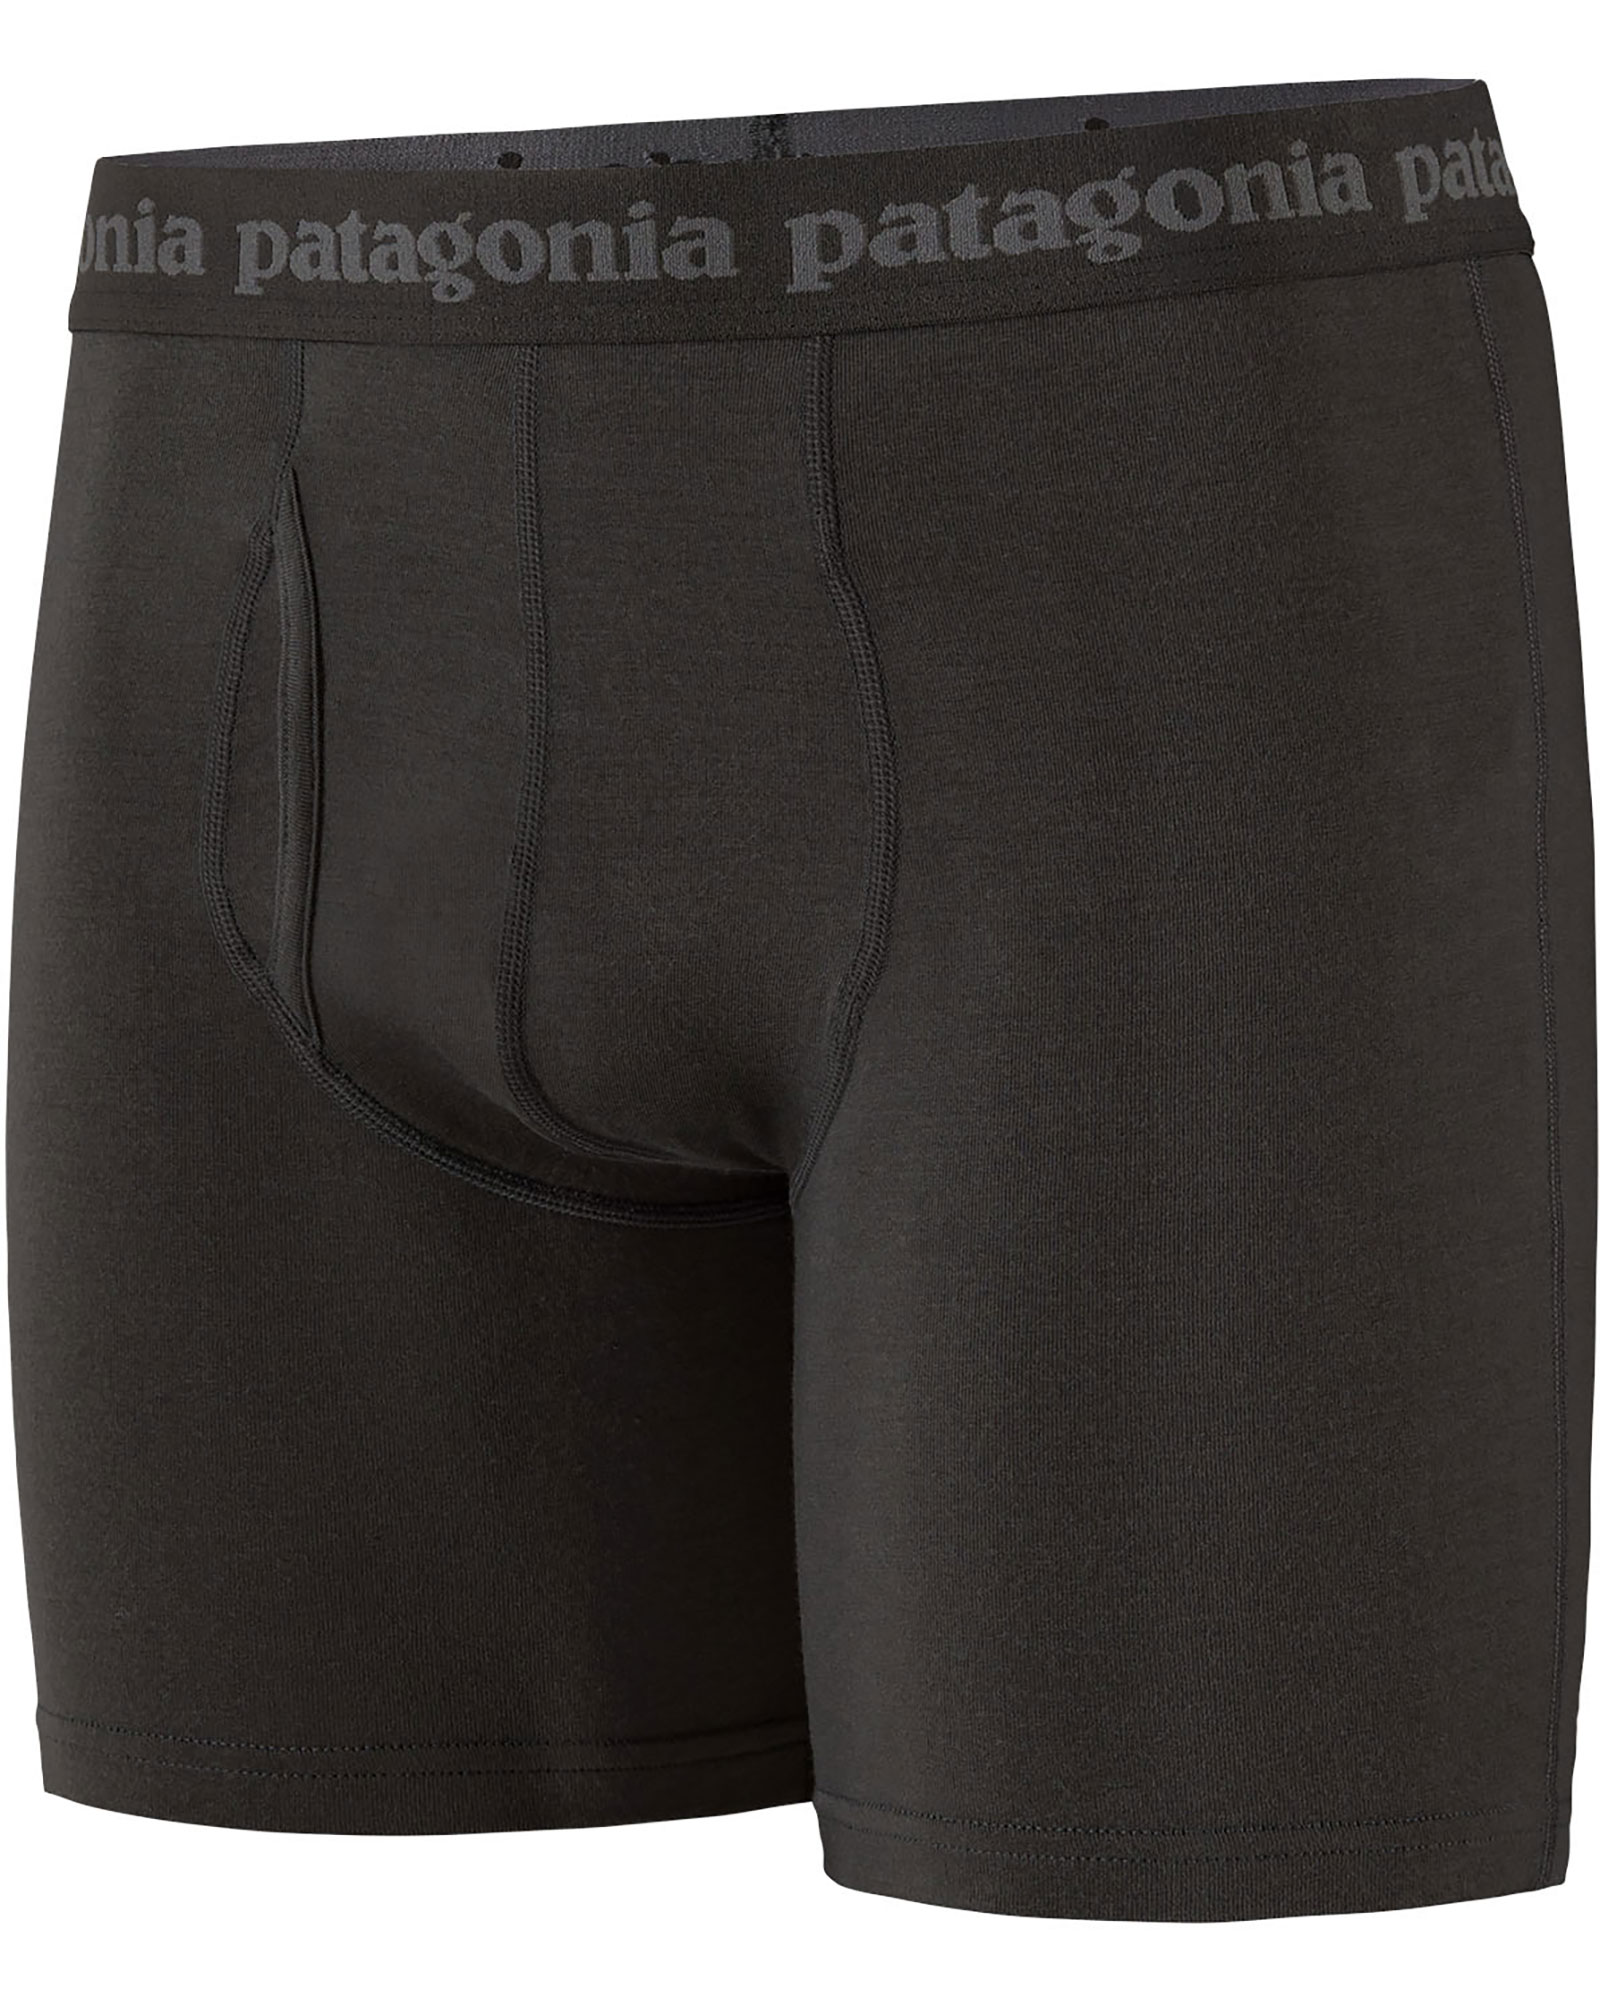 Patagonia Men’s Essential 6" Boxers - black L